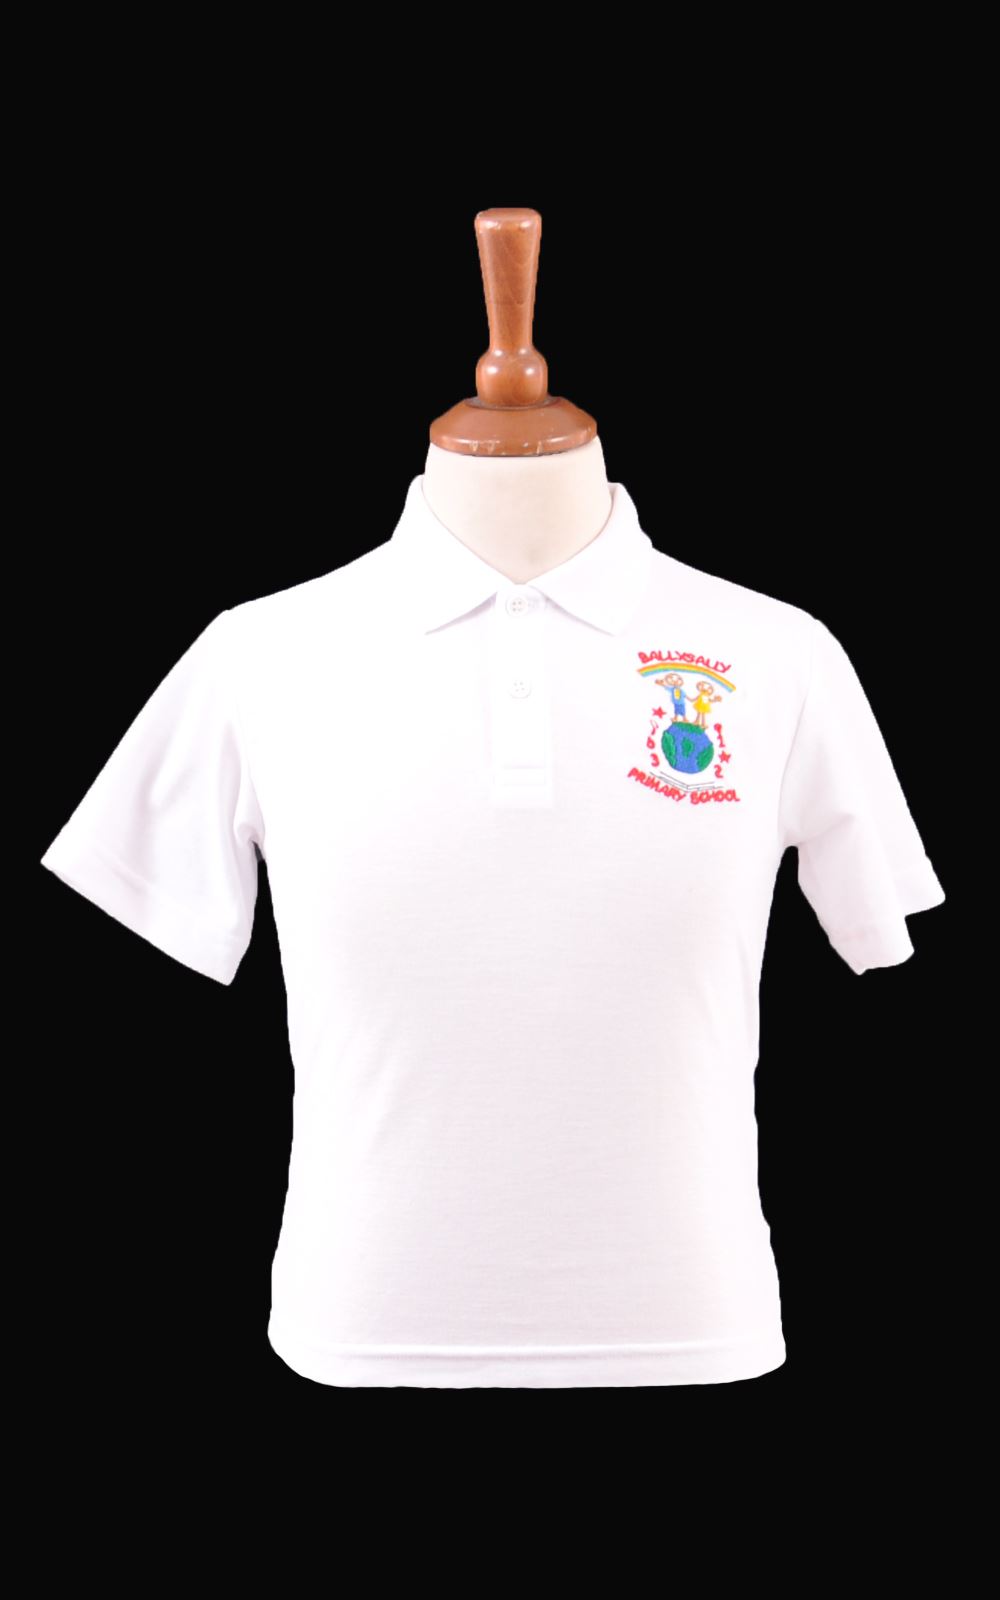 S&T Moore. Ballysally PS Polo Shirt - Woodbank